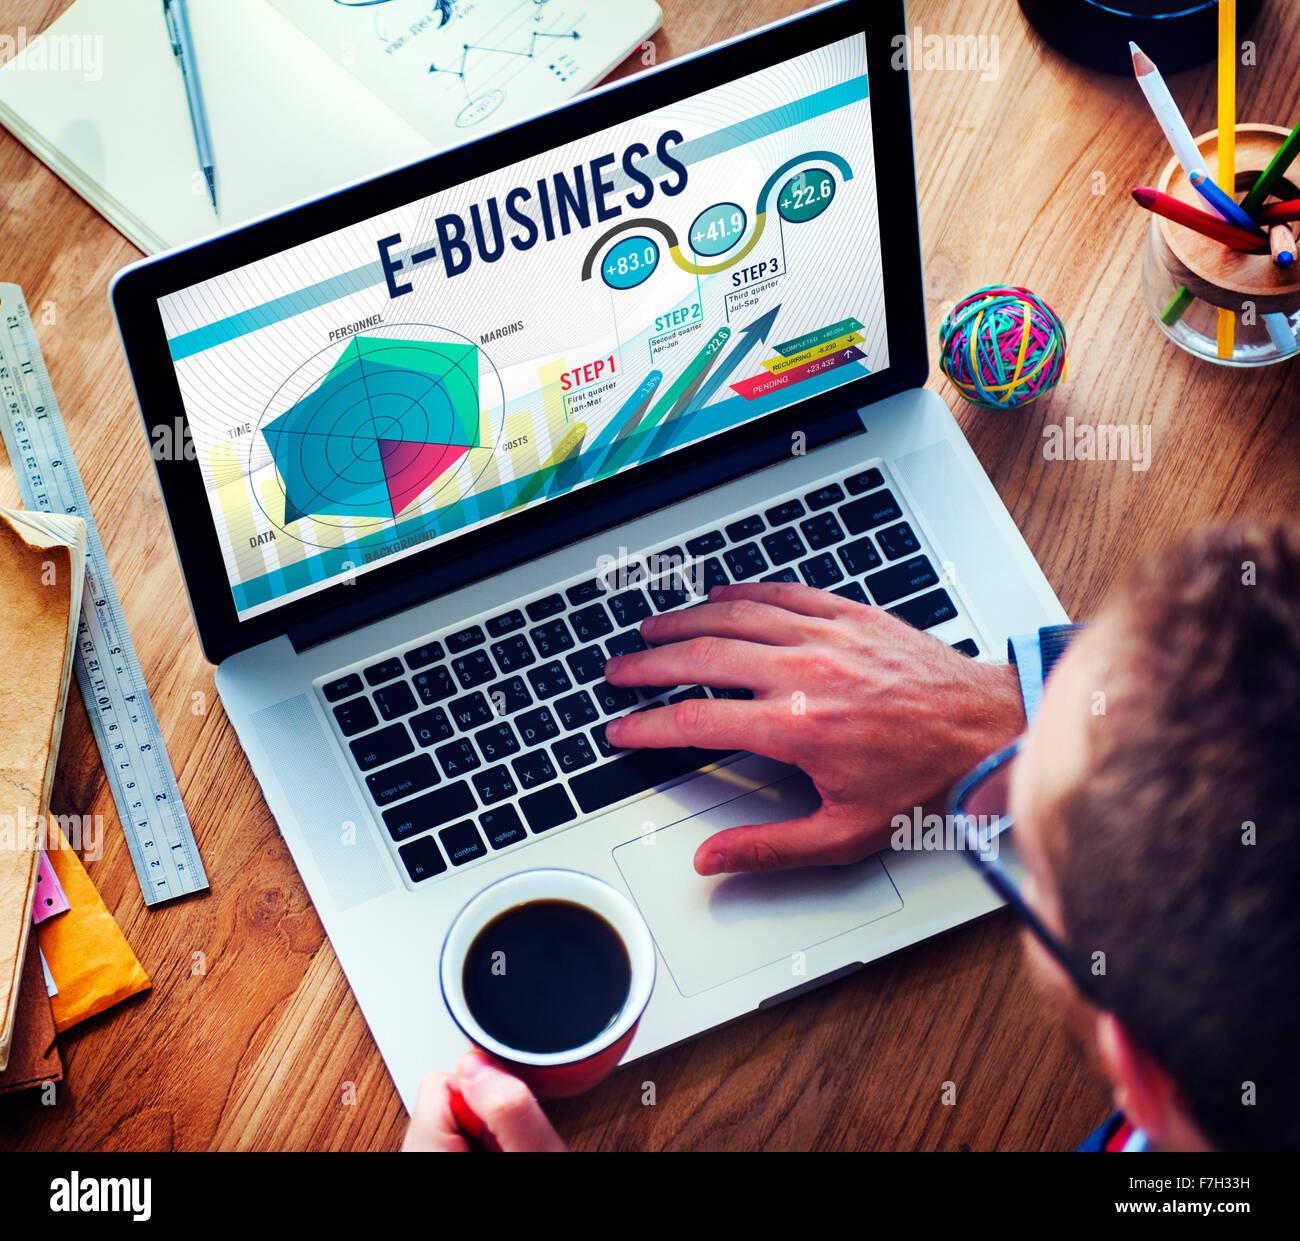 E-Business Global Business Digital Marketing Concept Stock Photo